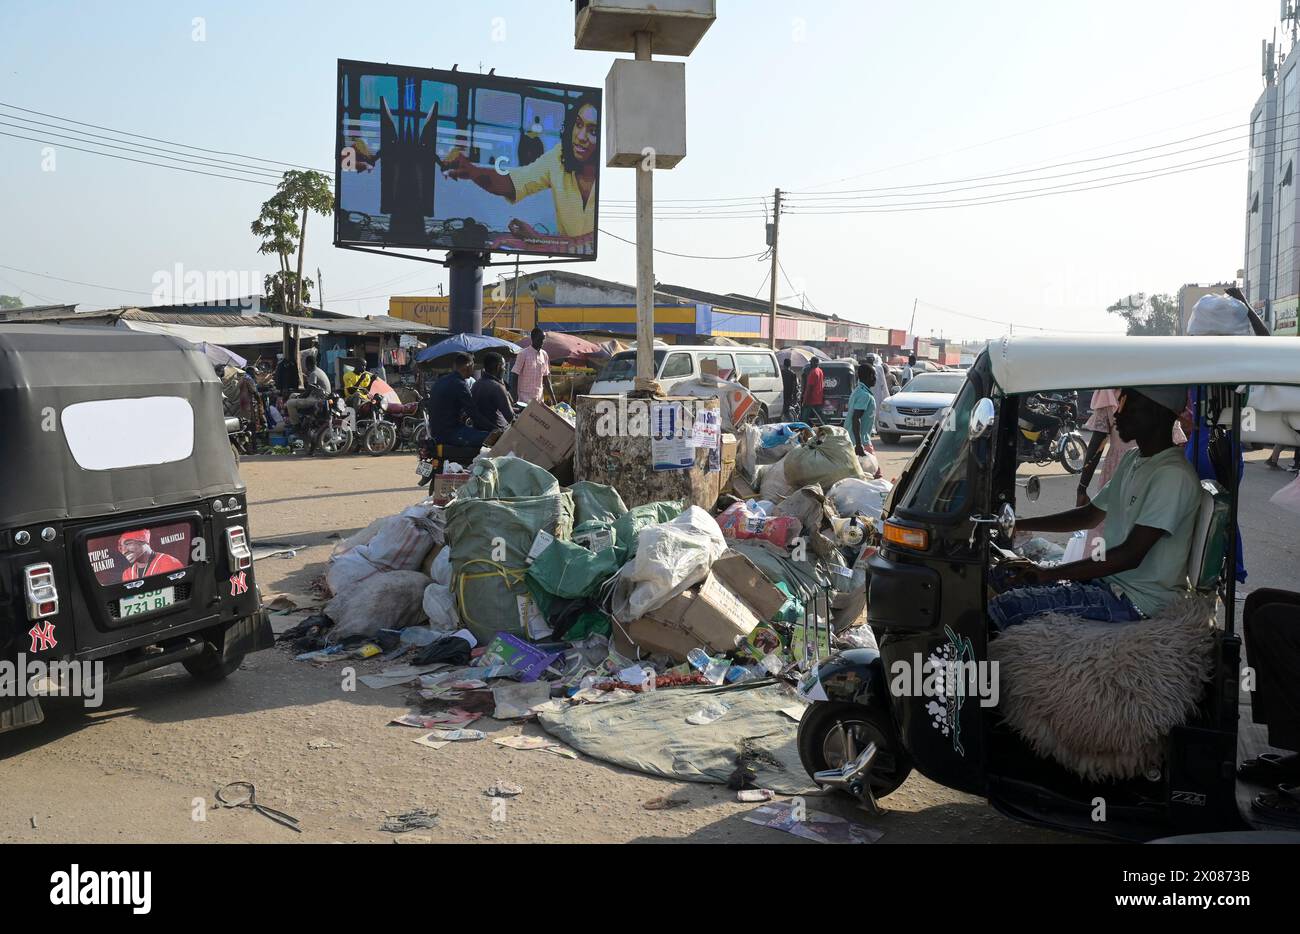 SOUTH-SUDAN, capital city Juba, garbage on the road / SÜDSUDAN, Hauptstadt Juba, Straßenszene, Müll auf der Straße Stock Photo